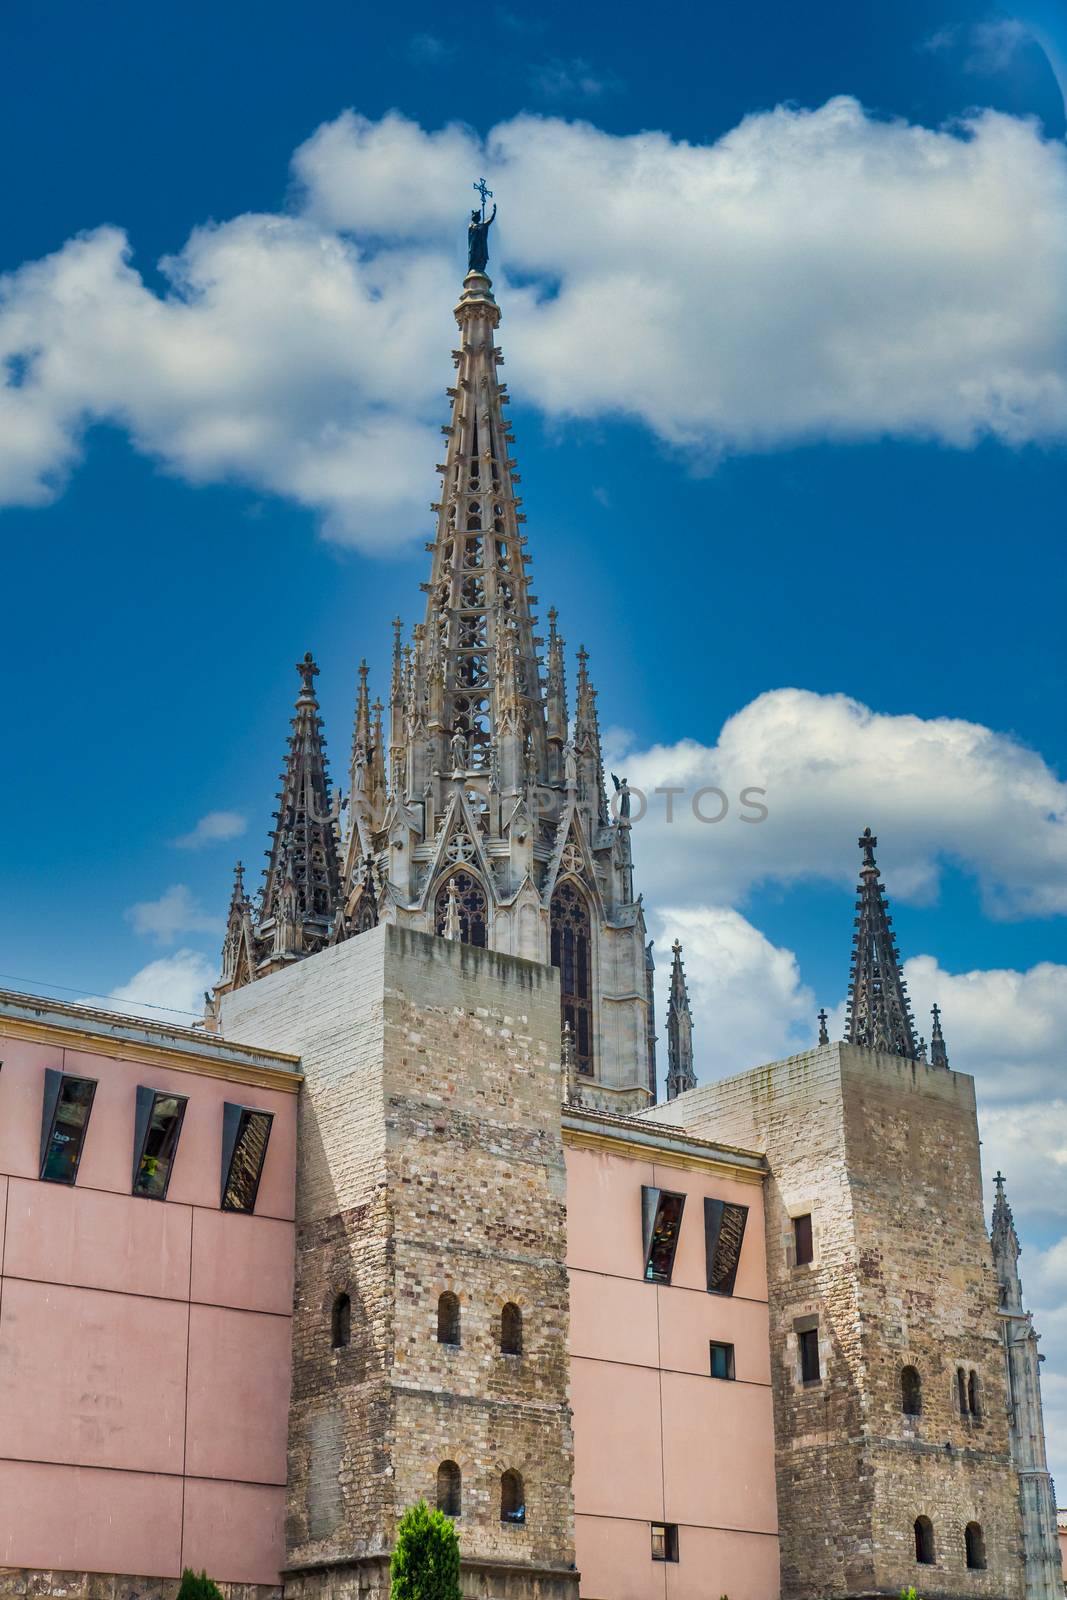 Gothic Church Spires over Barcelona by dbvirago